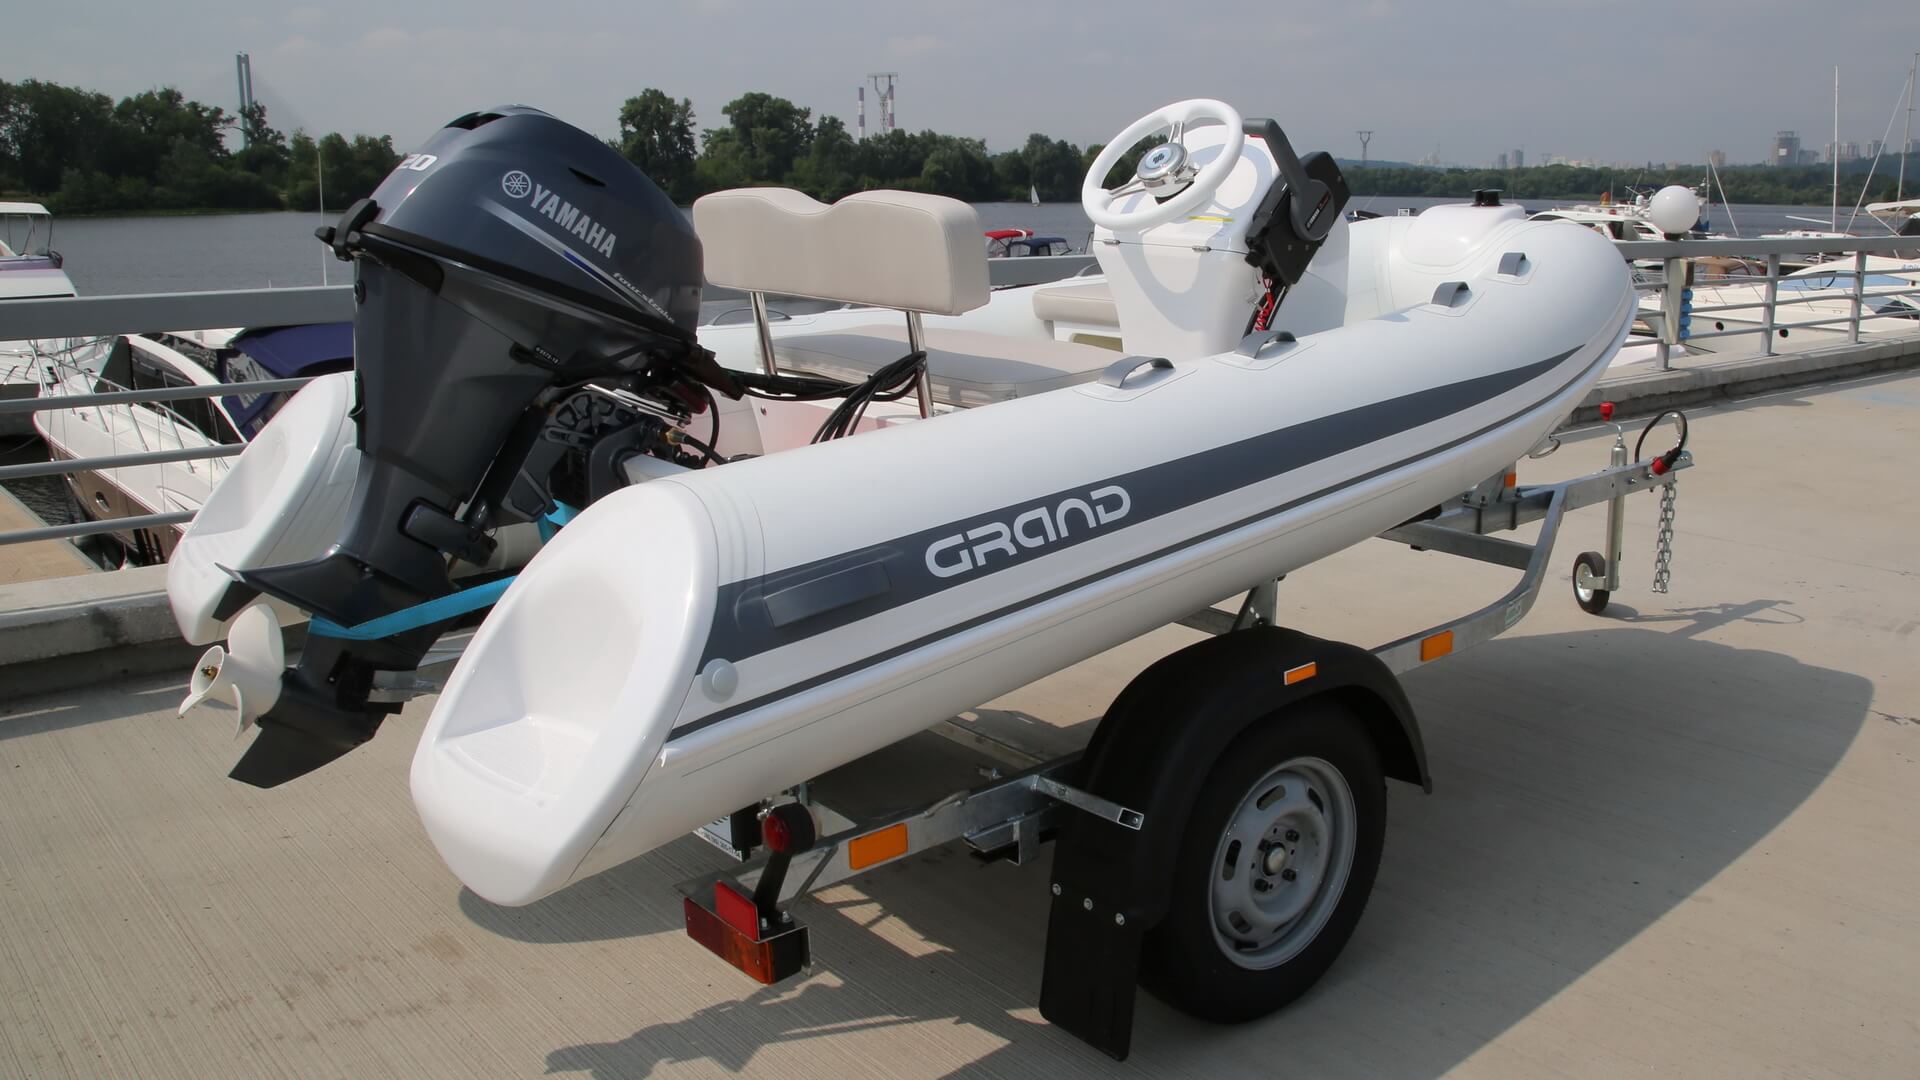 Надувная лодка с жестким дном GRAND Silver Line S330L,Надувная лодка GRAND Silver Line S330L, GRAND Silver Line S330L, GRAND Silver Line S330LF, GRAND S330L, GRAND S330LF, GRAND S330, Надувная лодка GRAND, Надувная лодка ГРАНД, Надувная лодка с жестким дном, RIB, Rigid Inflatable Boats